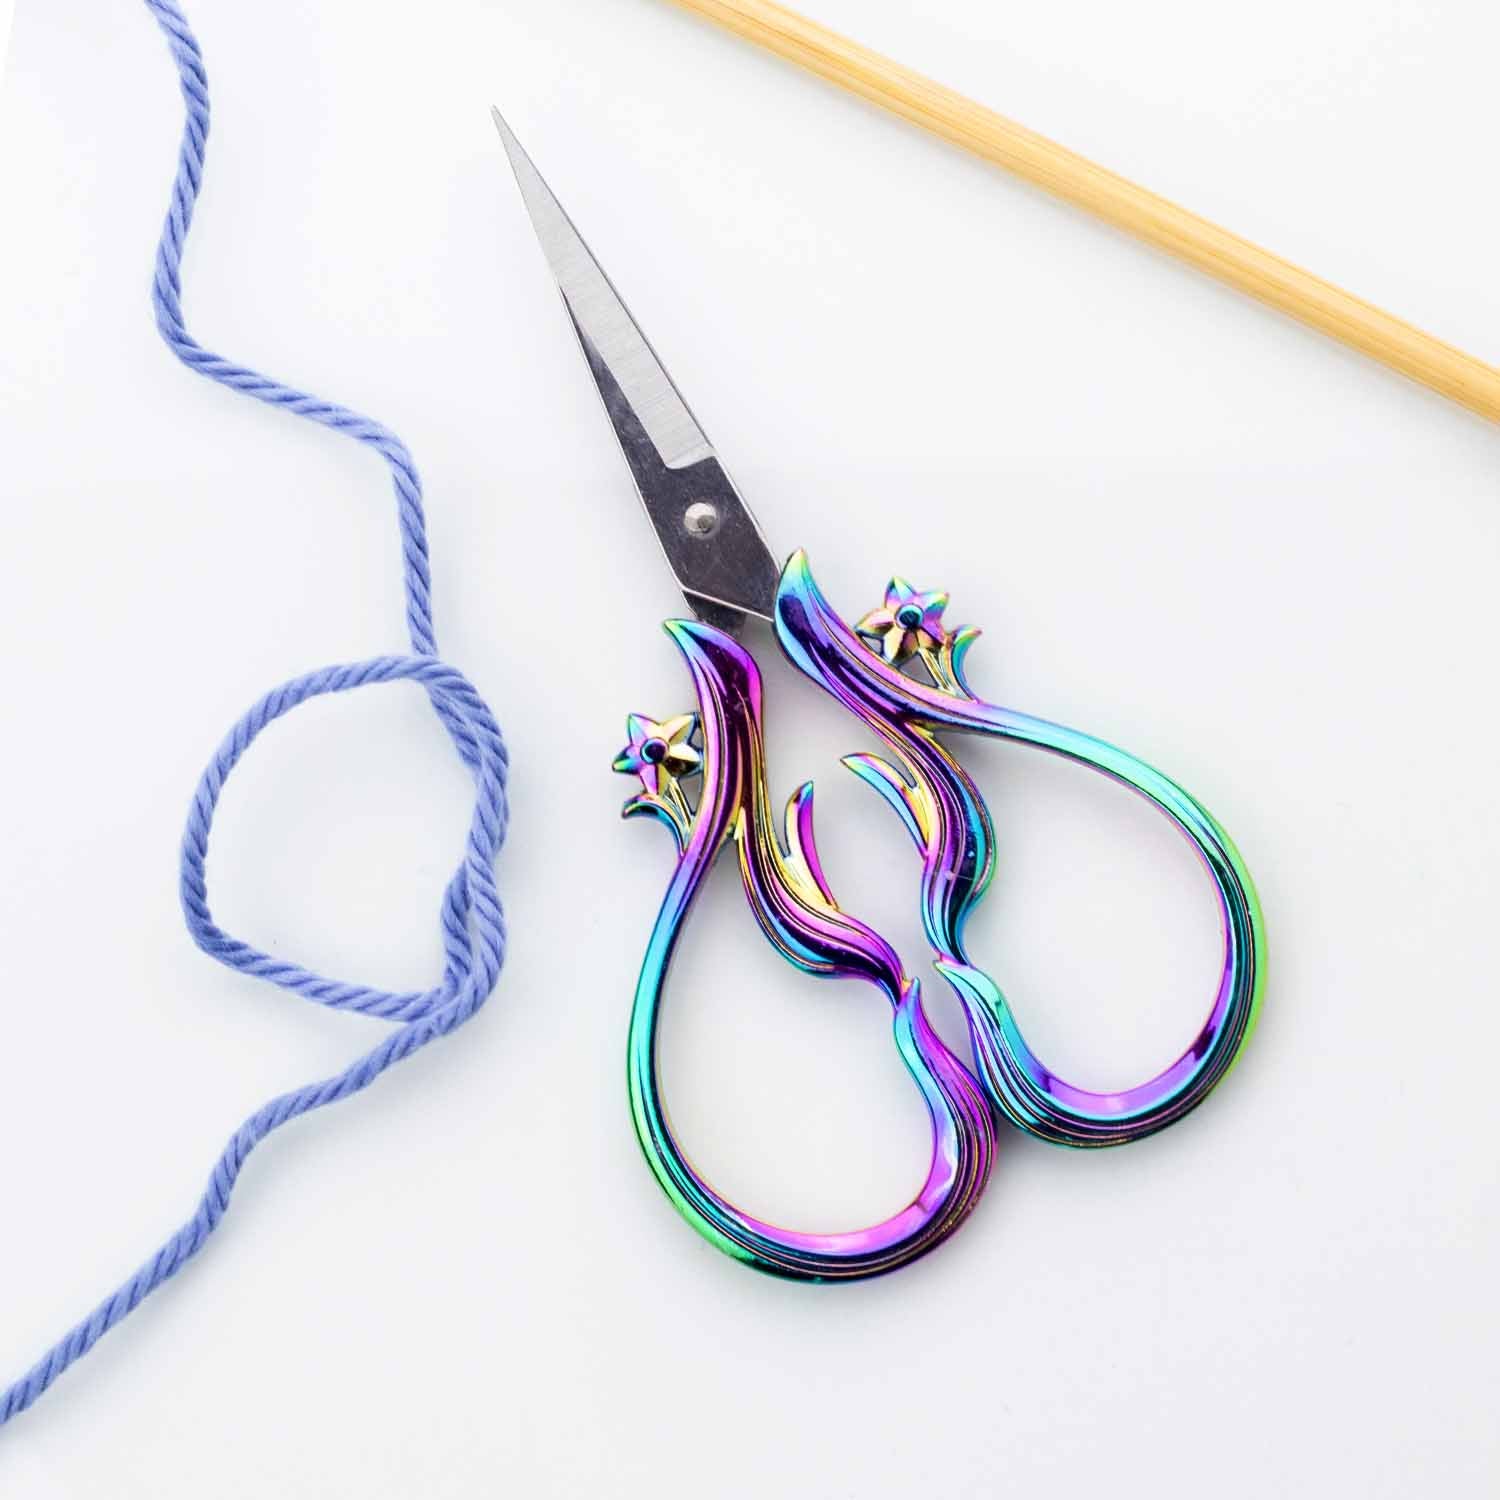 Star dust Rainbow Embroidery Scissors